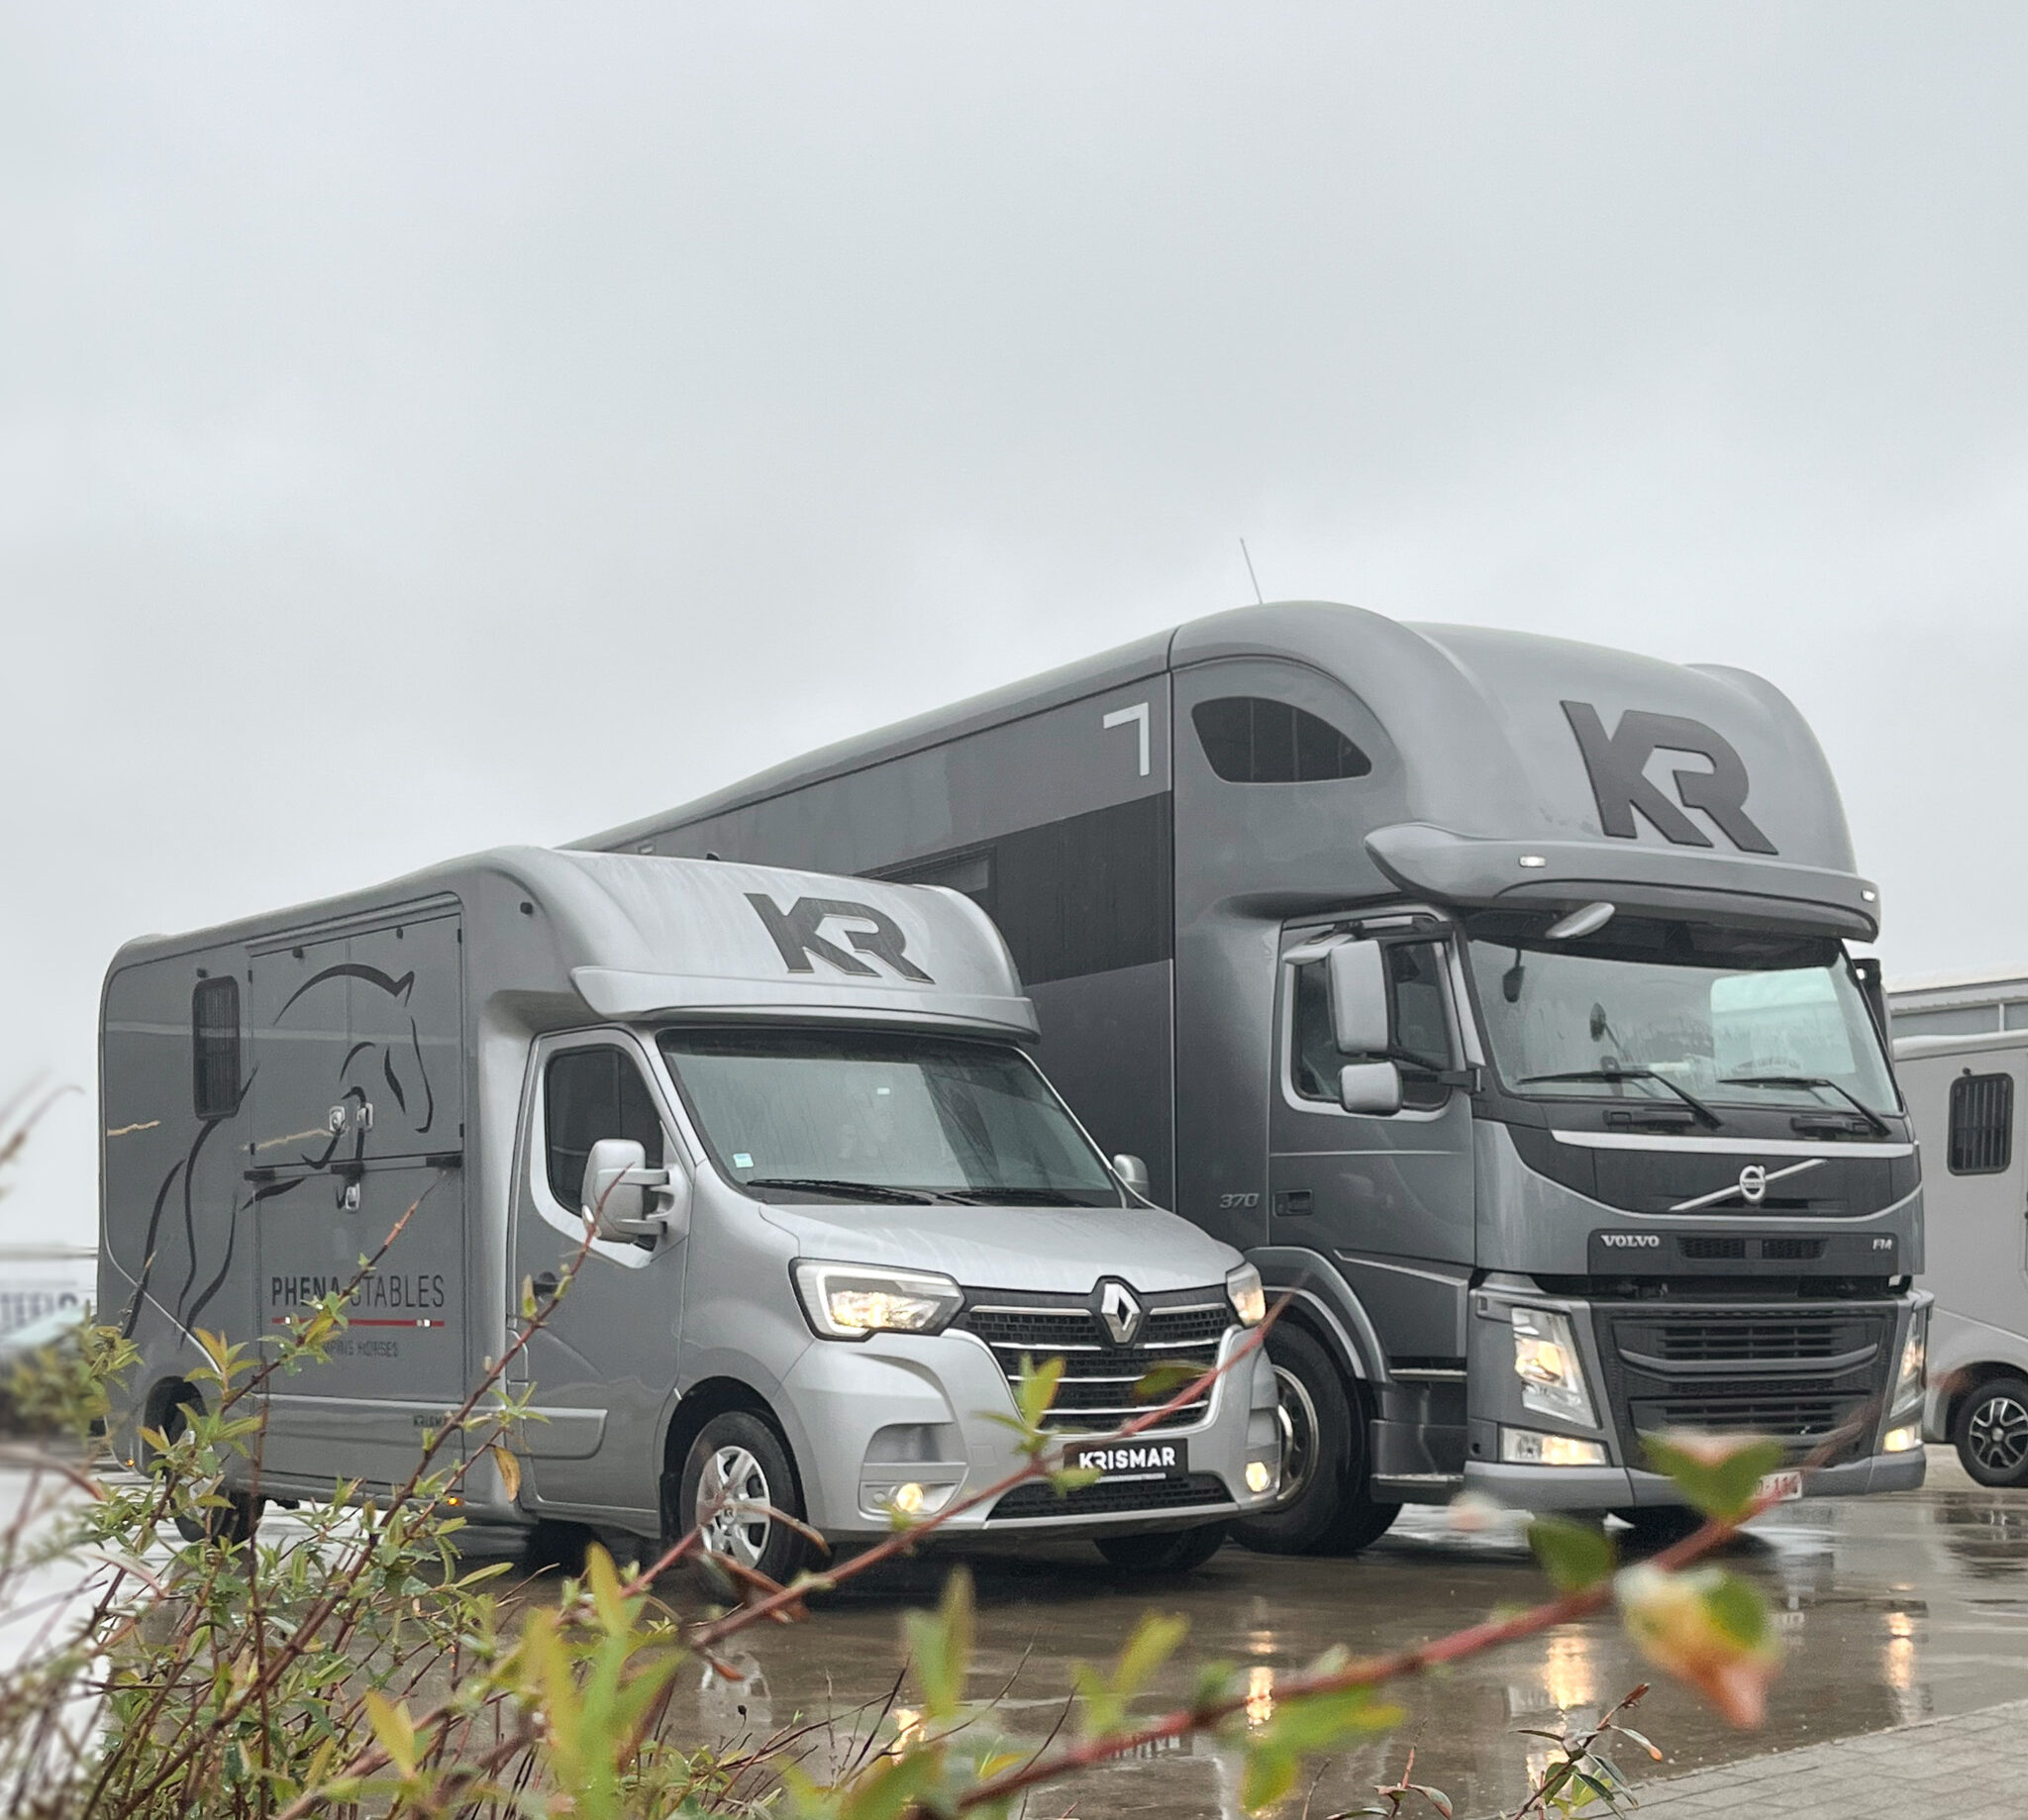 A gray Krismar horse truck with matching Krismar 2-horse.